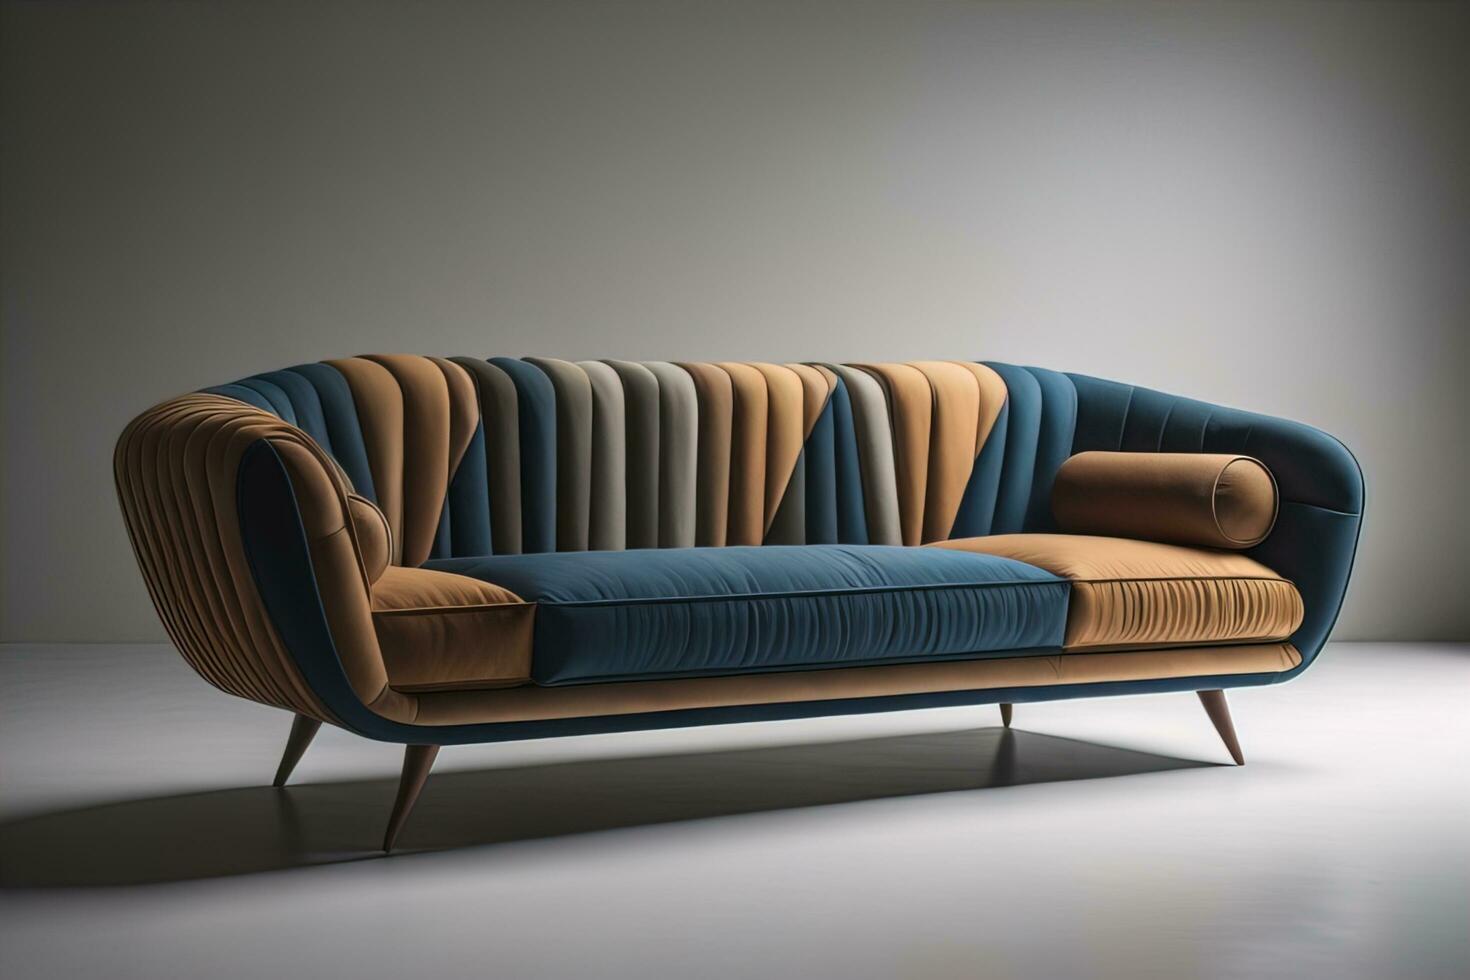 A creative, colourful, and stylish sofa in the interior, AI generated photo